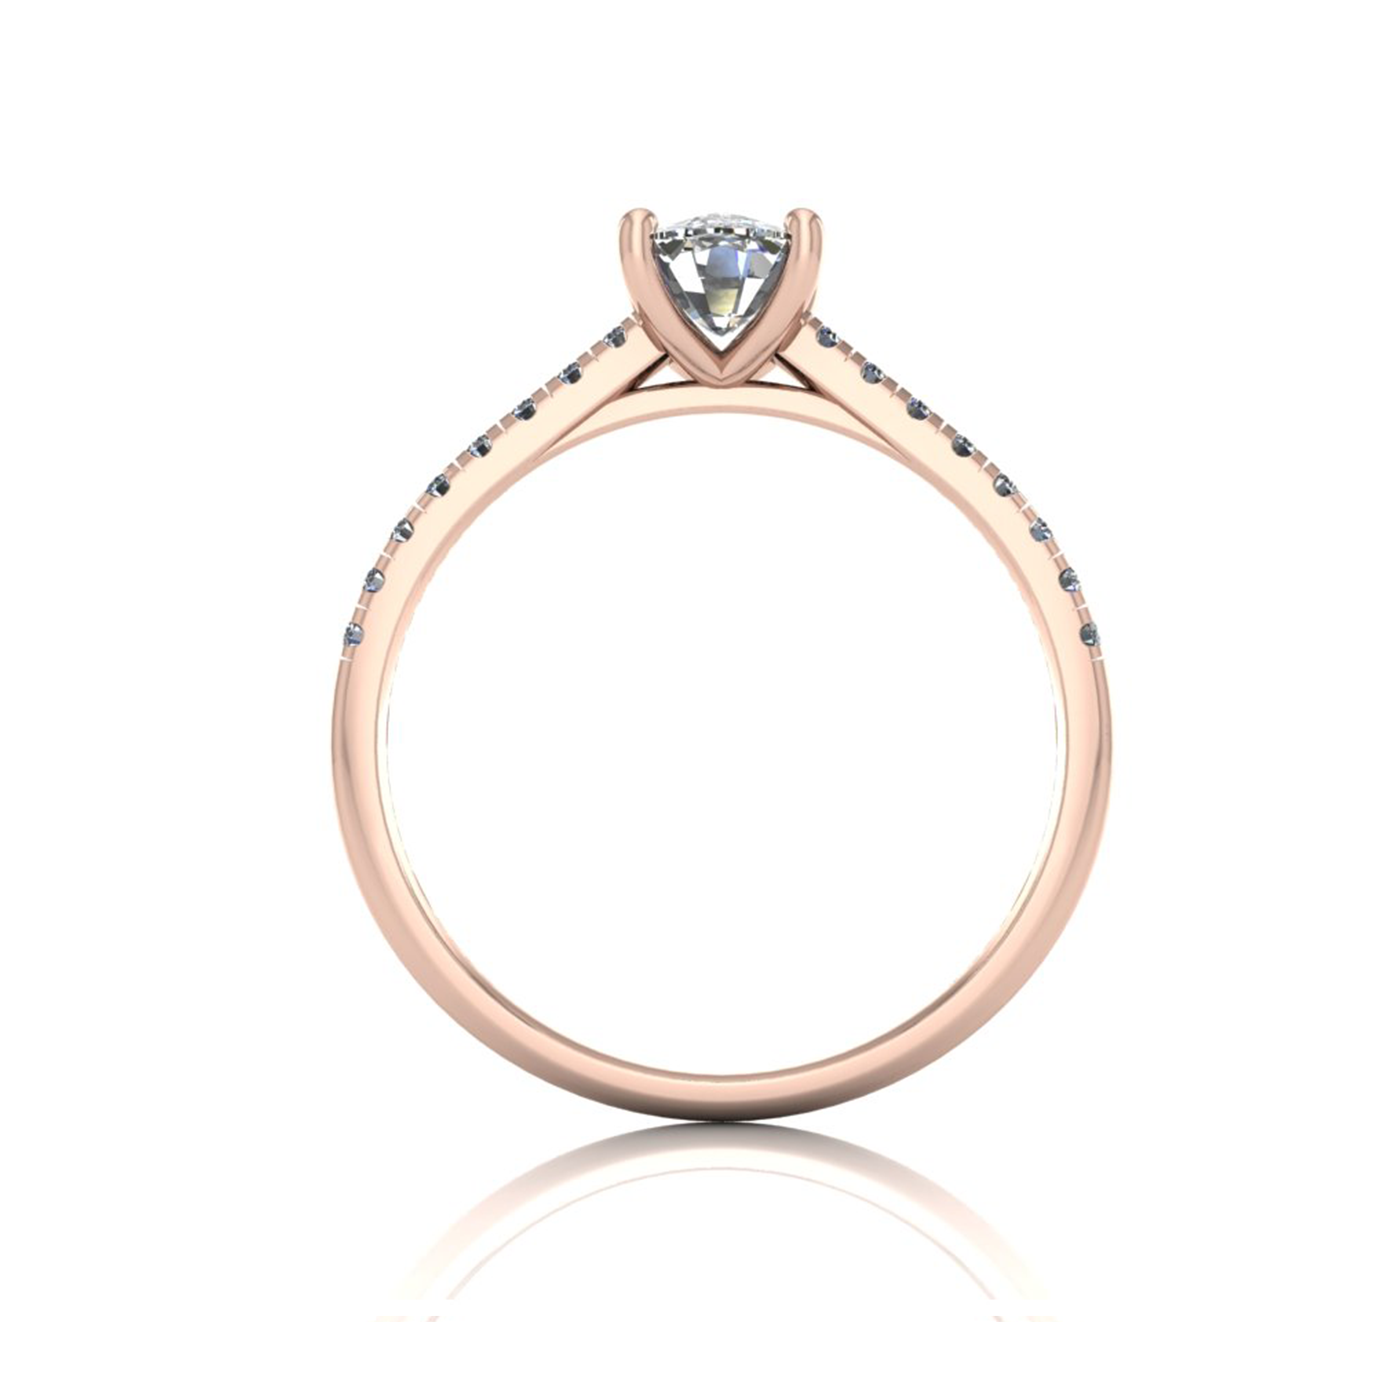 18k rose gold  4 prongs cushion cut diamond engagement ring with whisper thin pavÉ set band